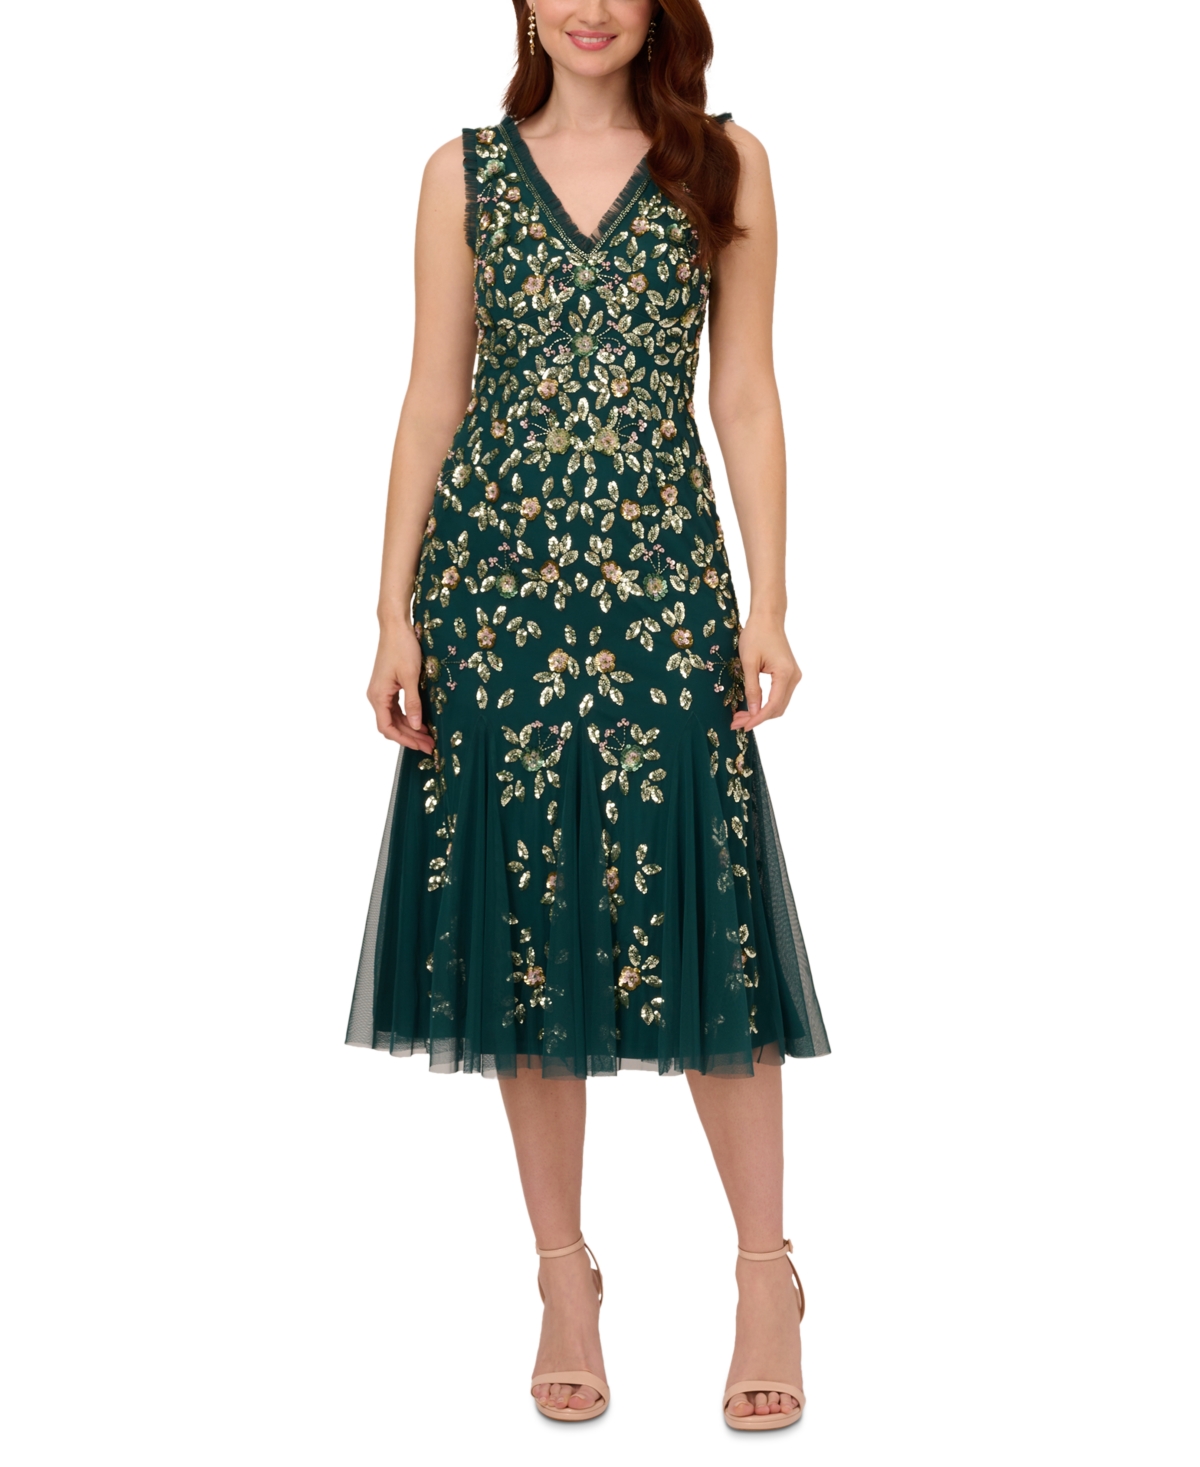 Great Gatsby Dress – Great Gatsby Dresses for Sale Adrianna Papell Womens Embellished Ruffled Godet Dress - Gem Green $299.00 AT vintagedancer.com